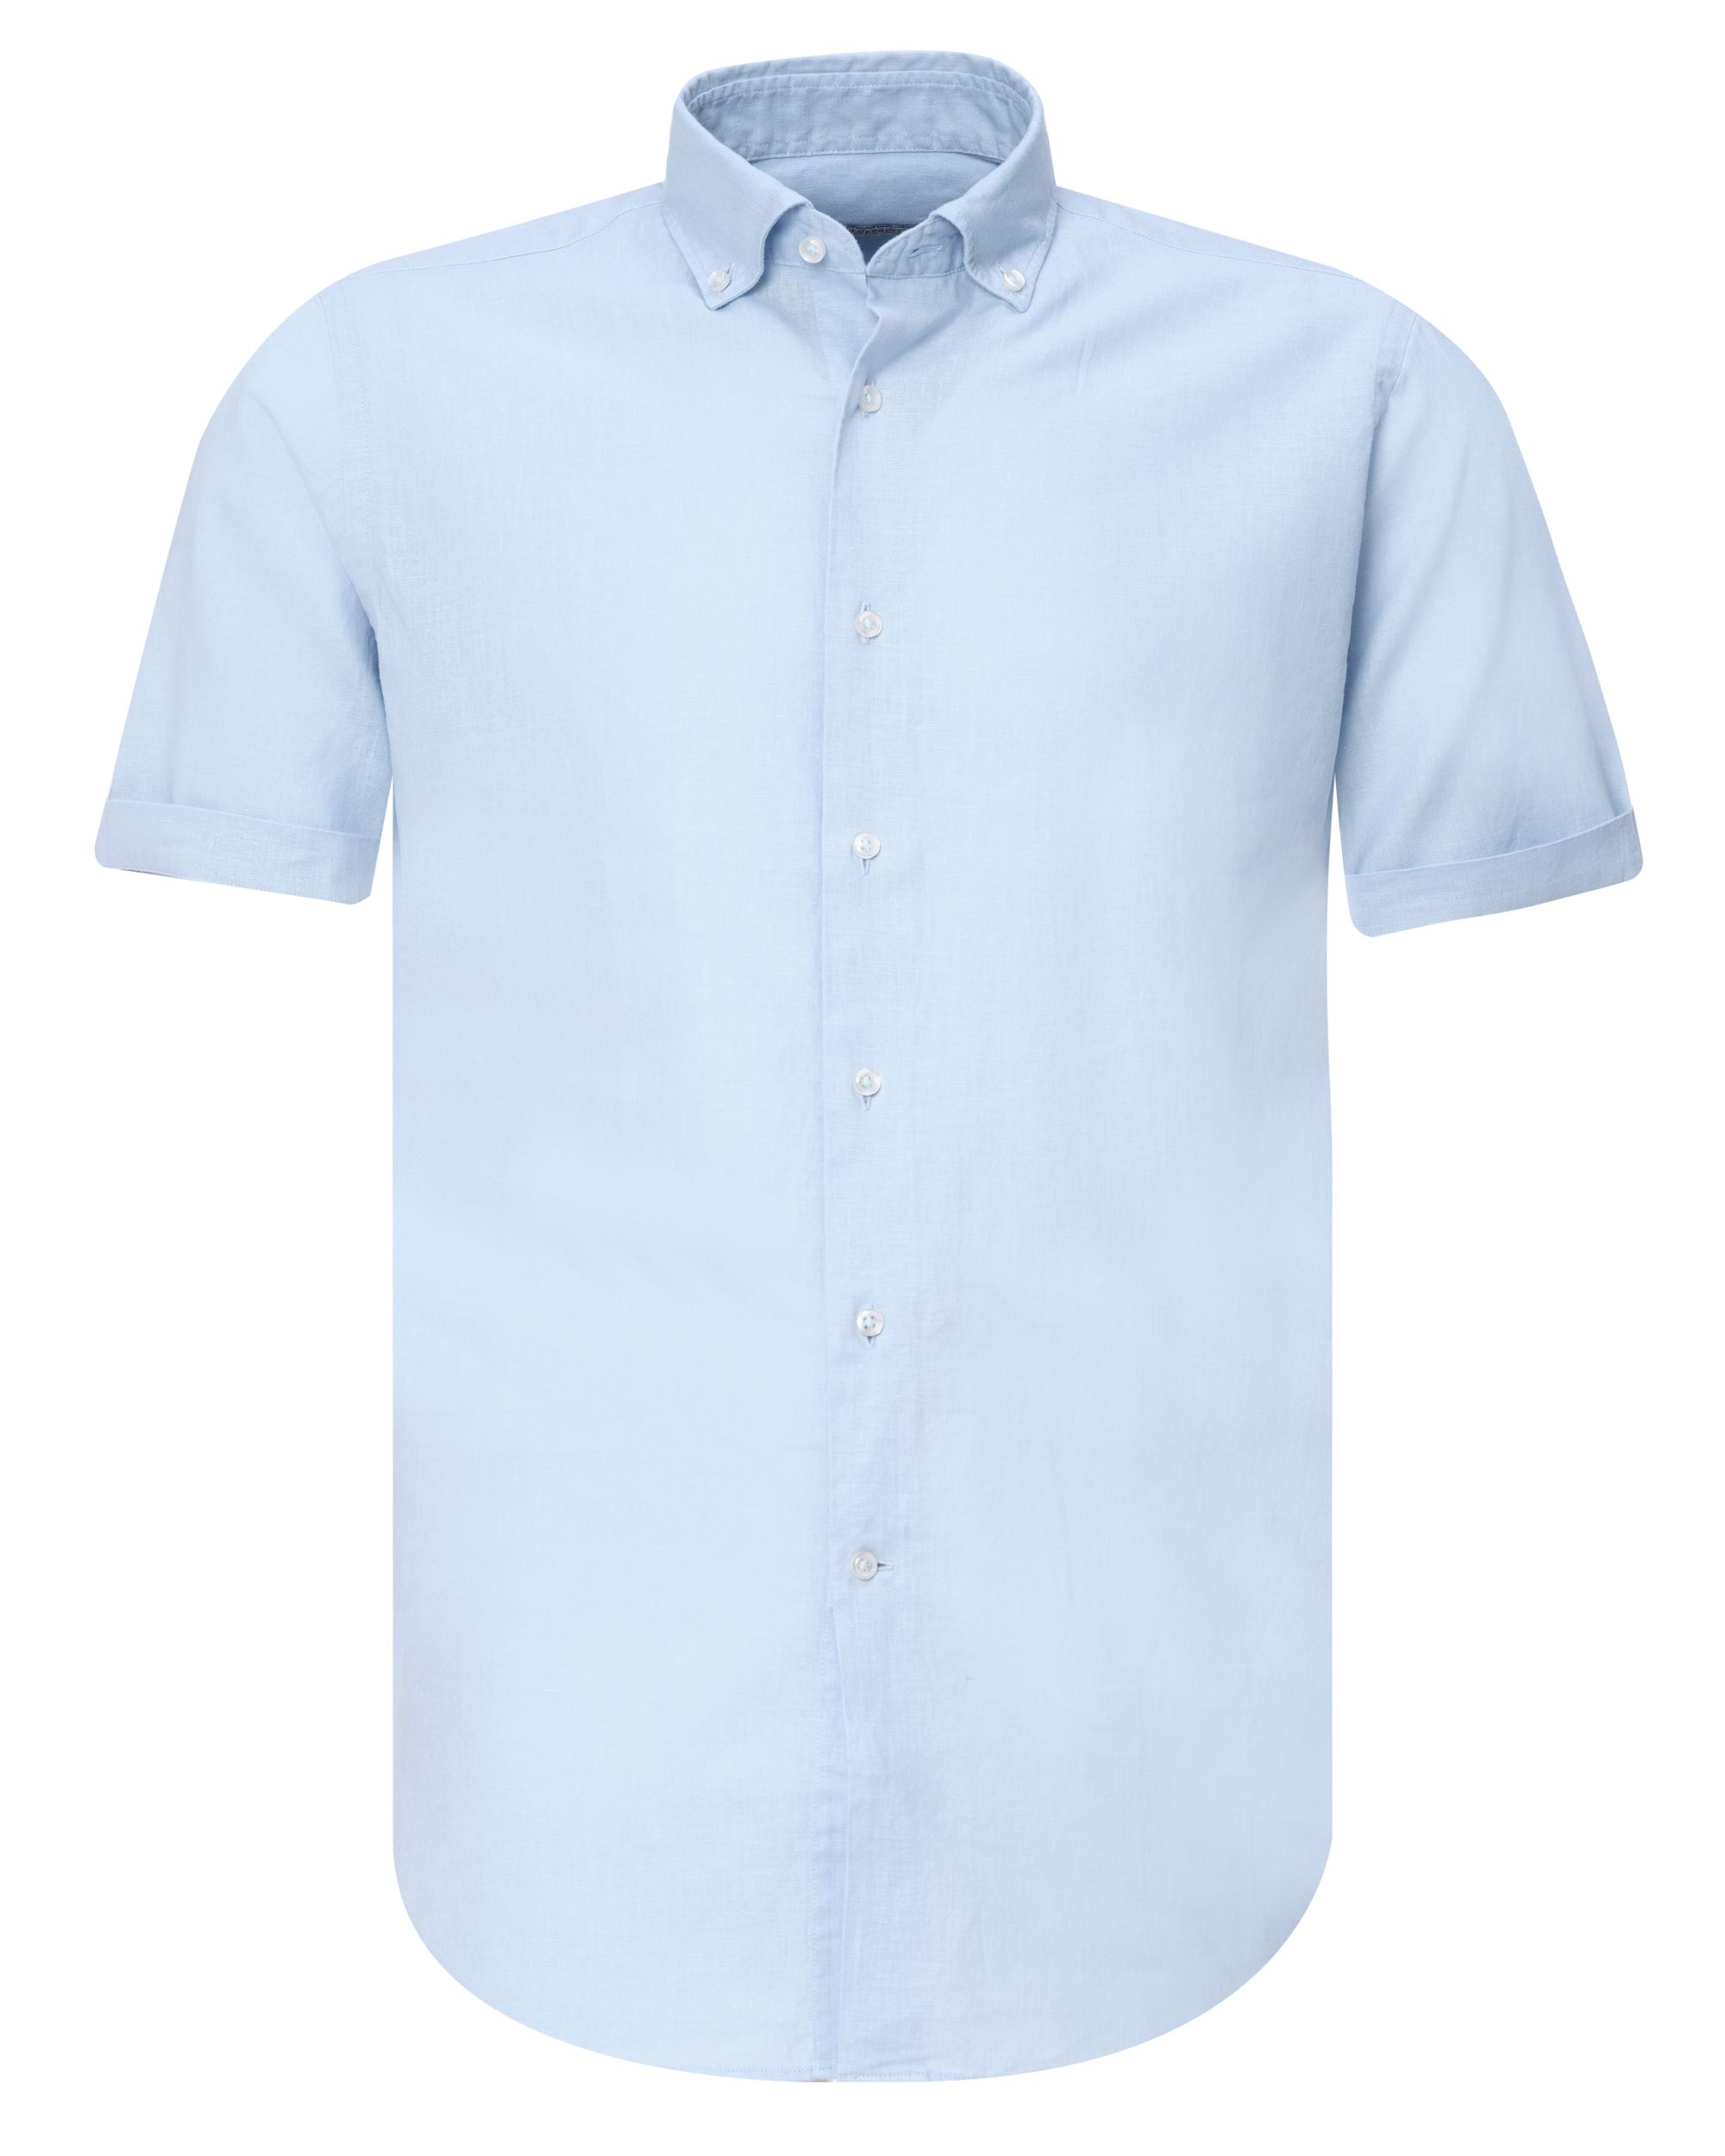 The BLUEPRINT Premium Casual Overhemd KM Lichtblauw uni 077930-005-L